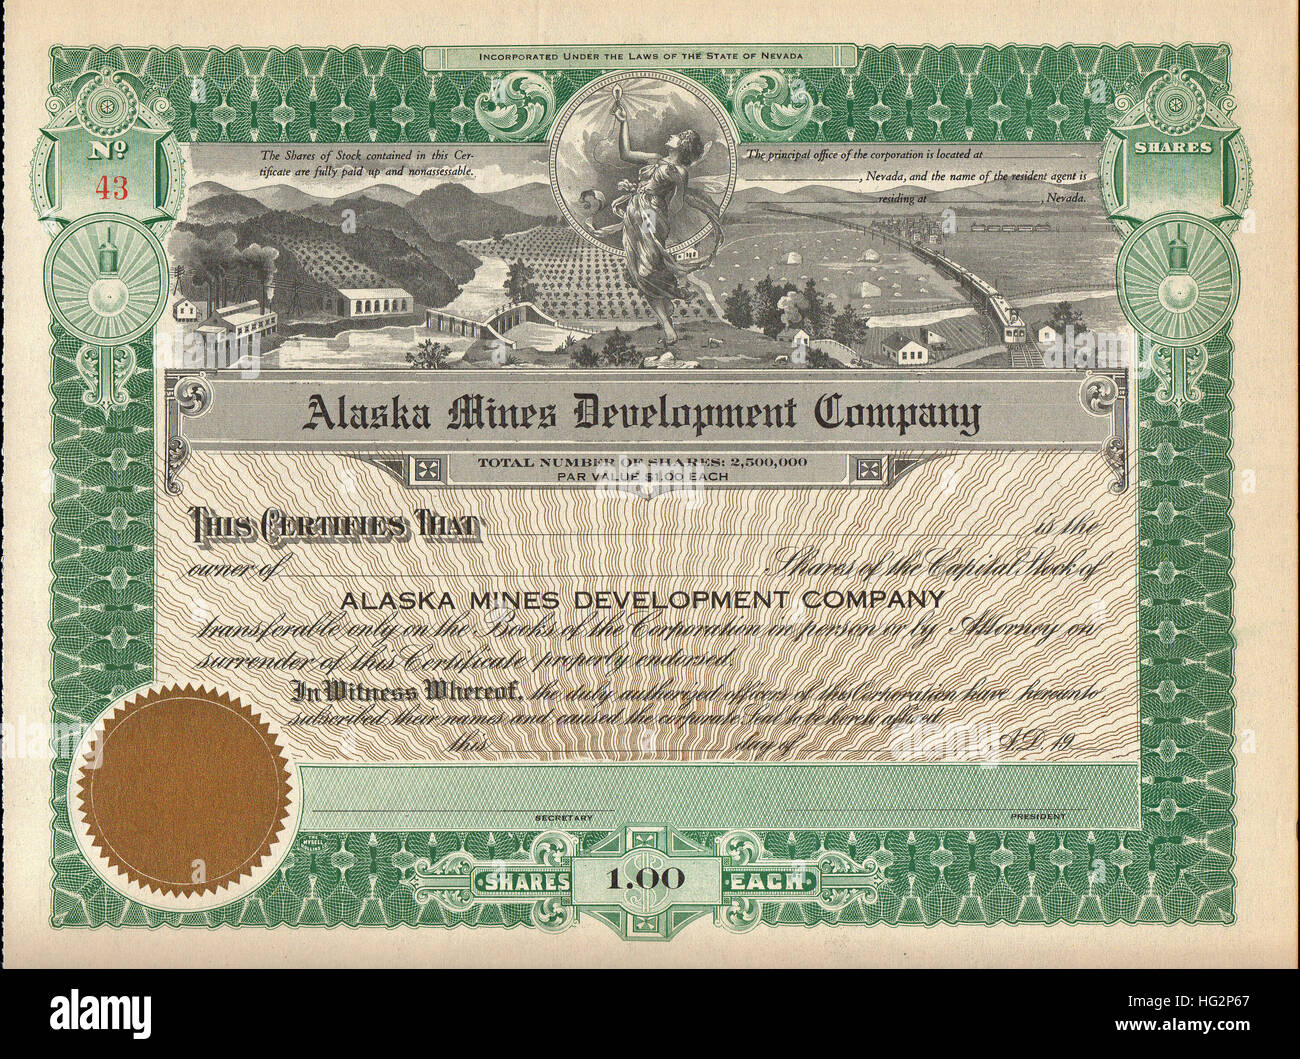 Early 1900s Alaska Mines Development Company Stock Certificate - USA Stock Photo